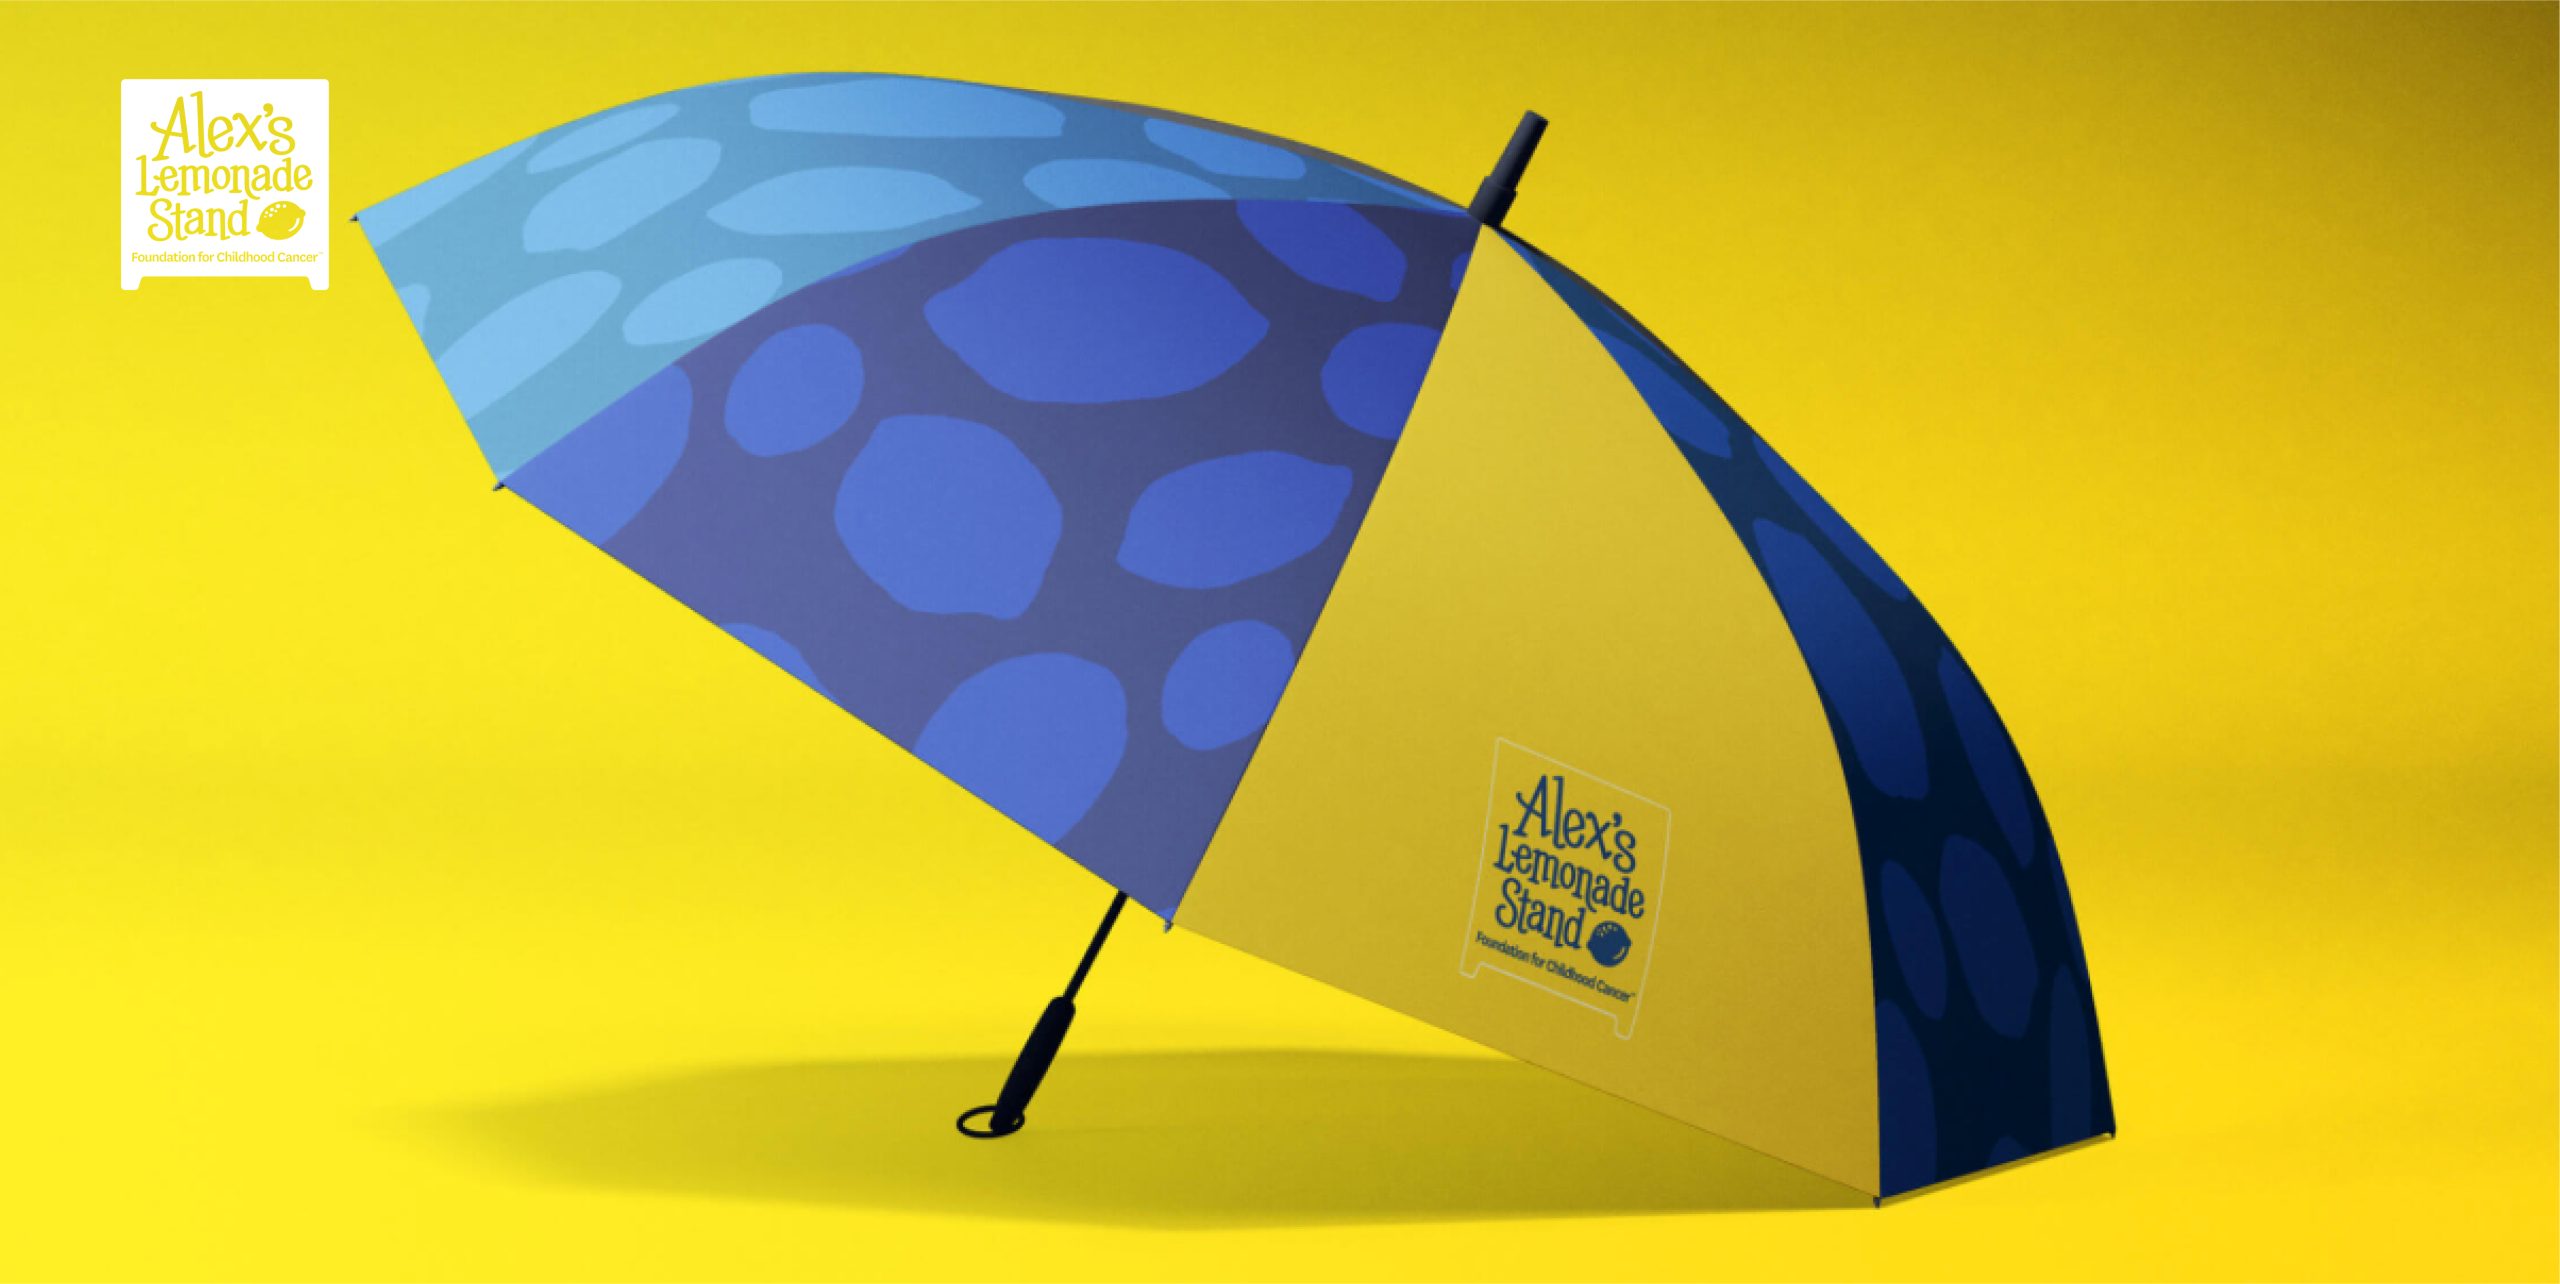 New Alex’s Lemonade Stand branded umbrella